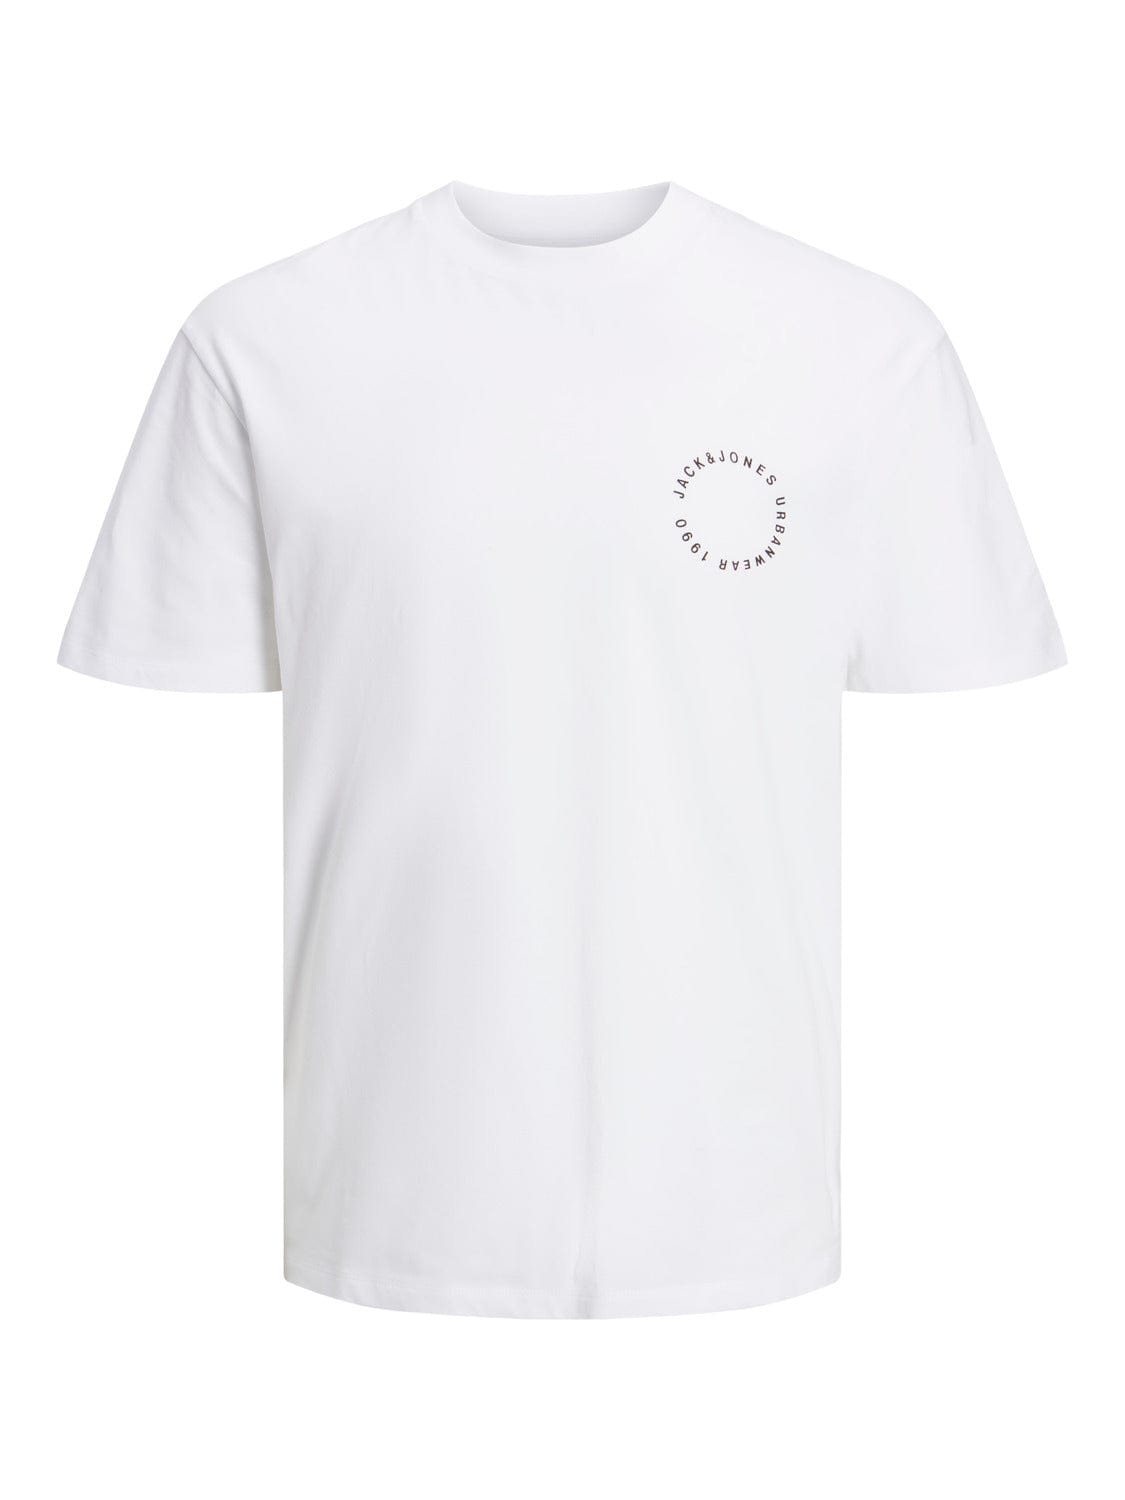 Camiseta manga corta blanca con logo - JJSUNSET